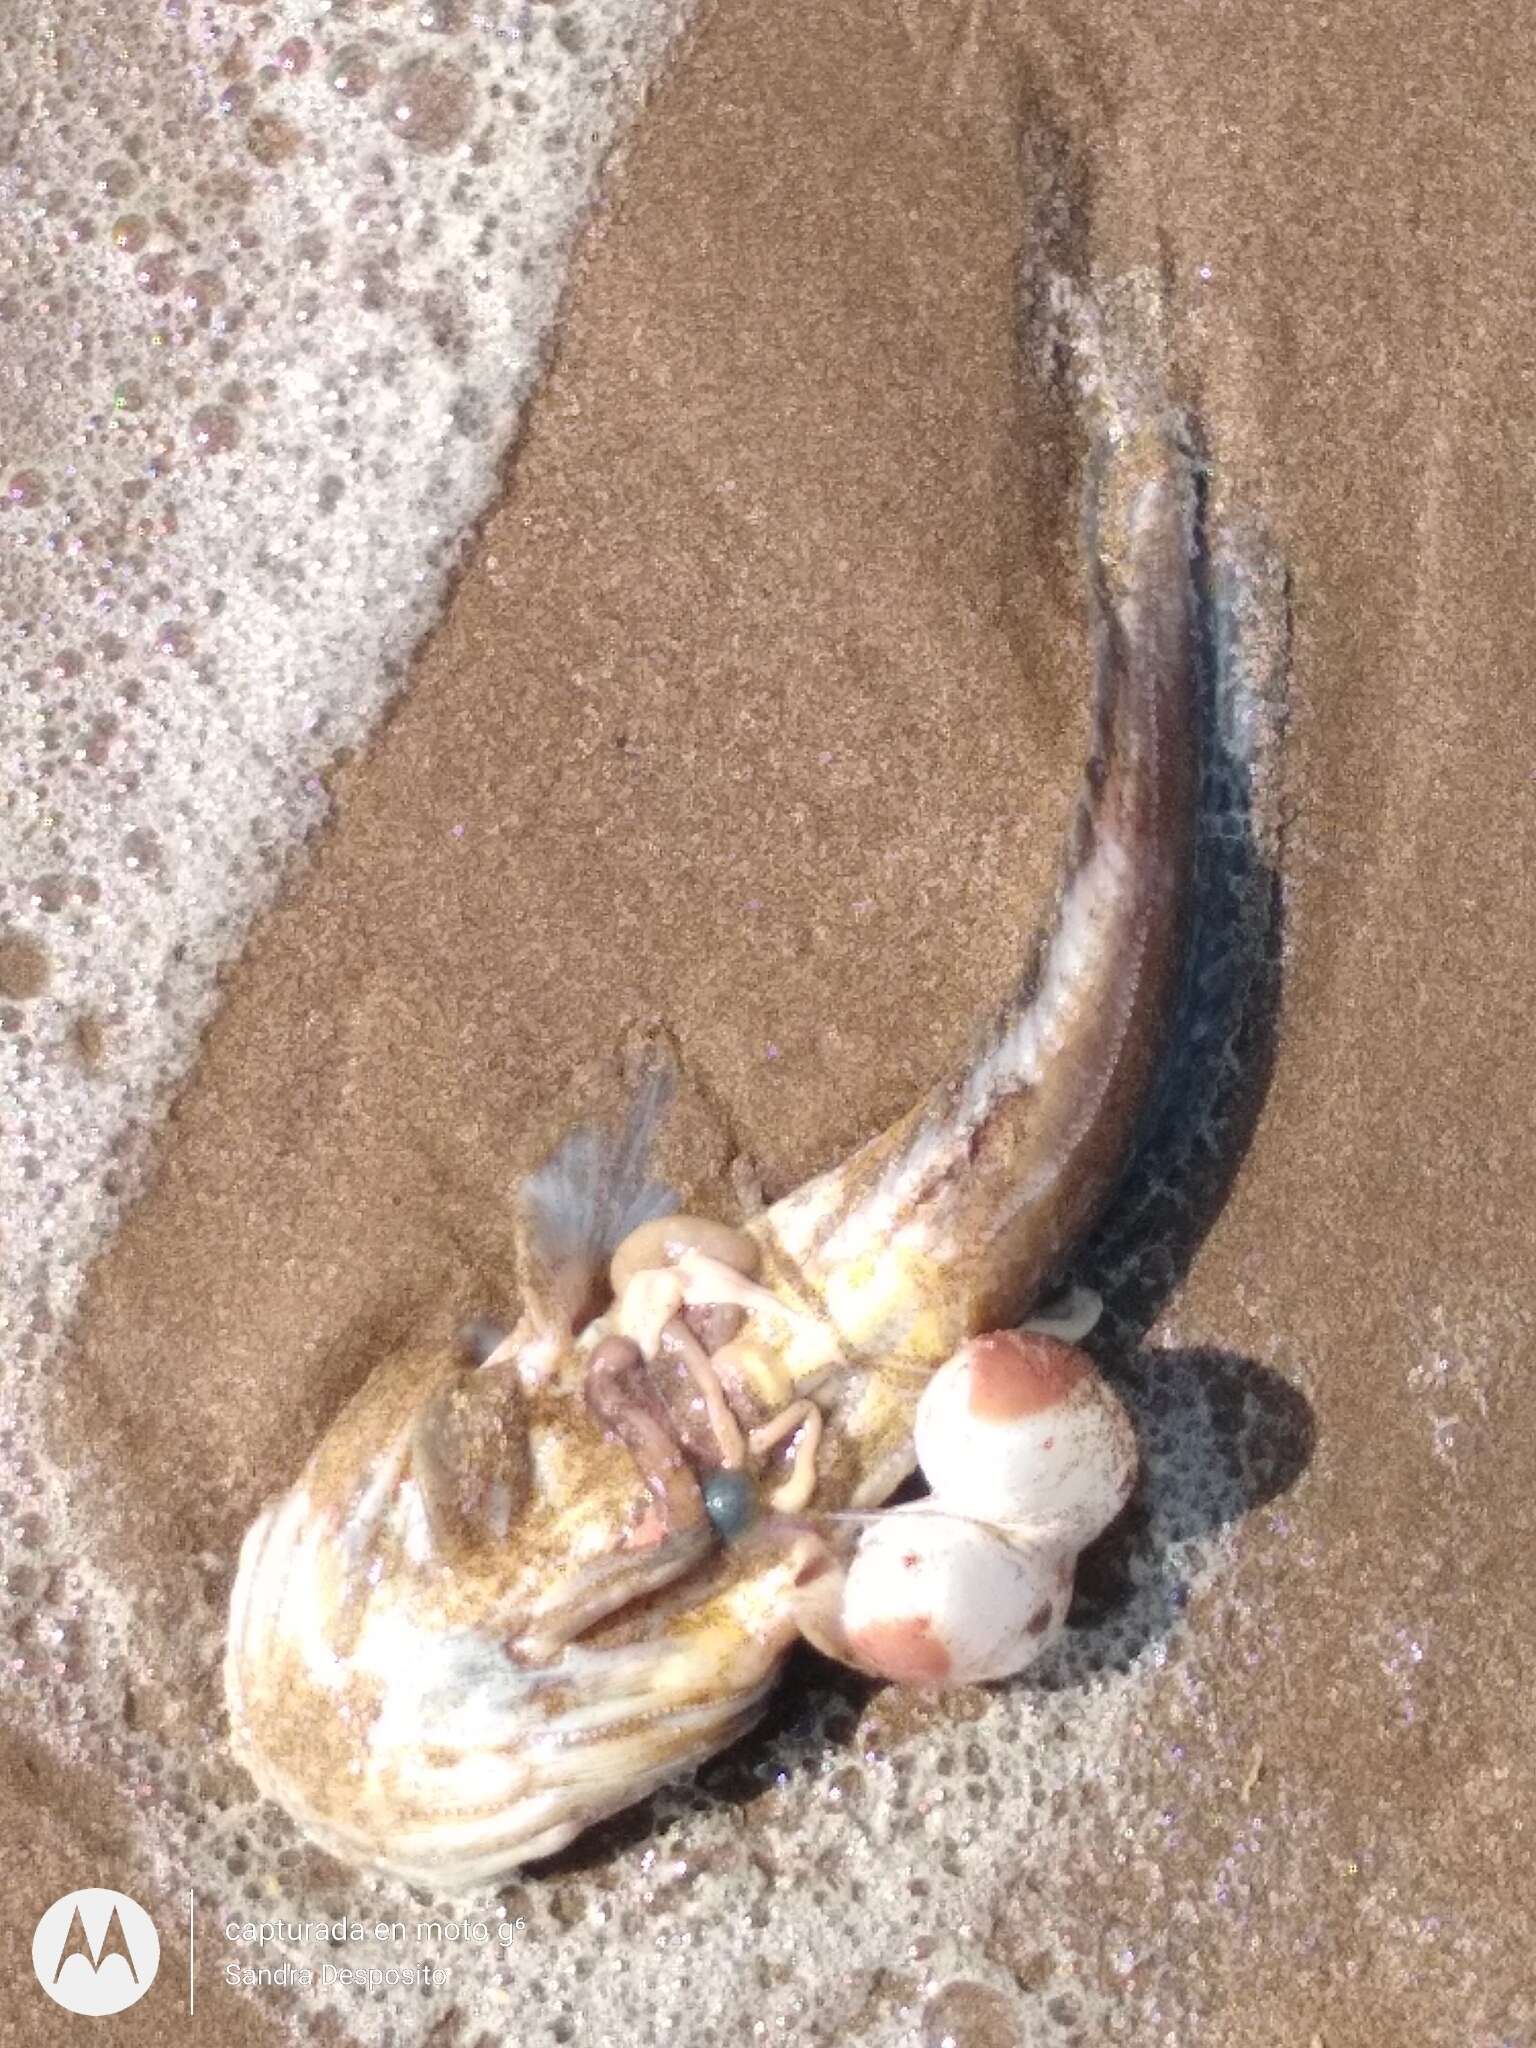 Image of Toadfish